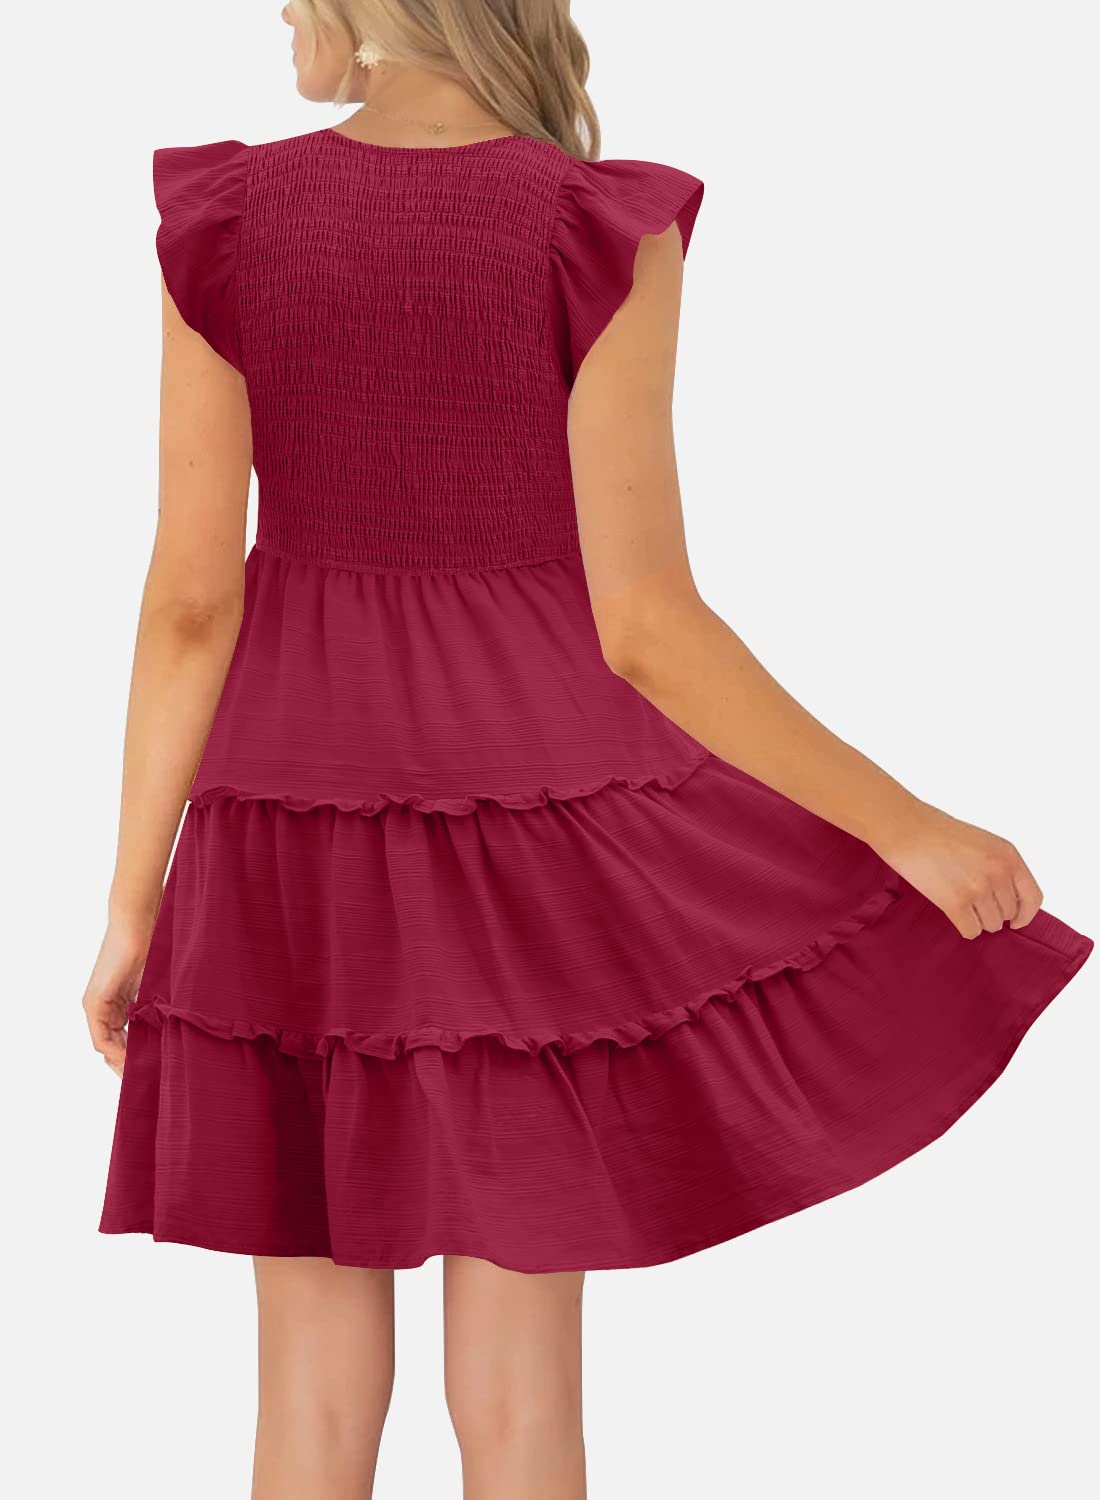 MIHOLL Women's Casual Summer Ruffle Babydoll Loose Mini Dress